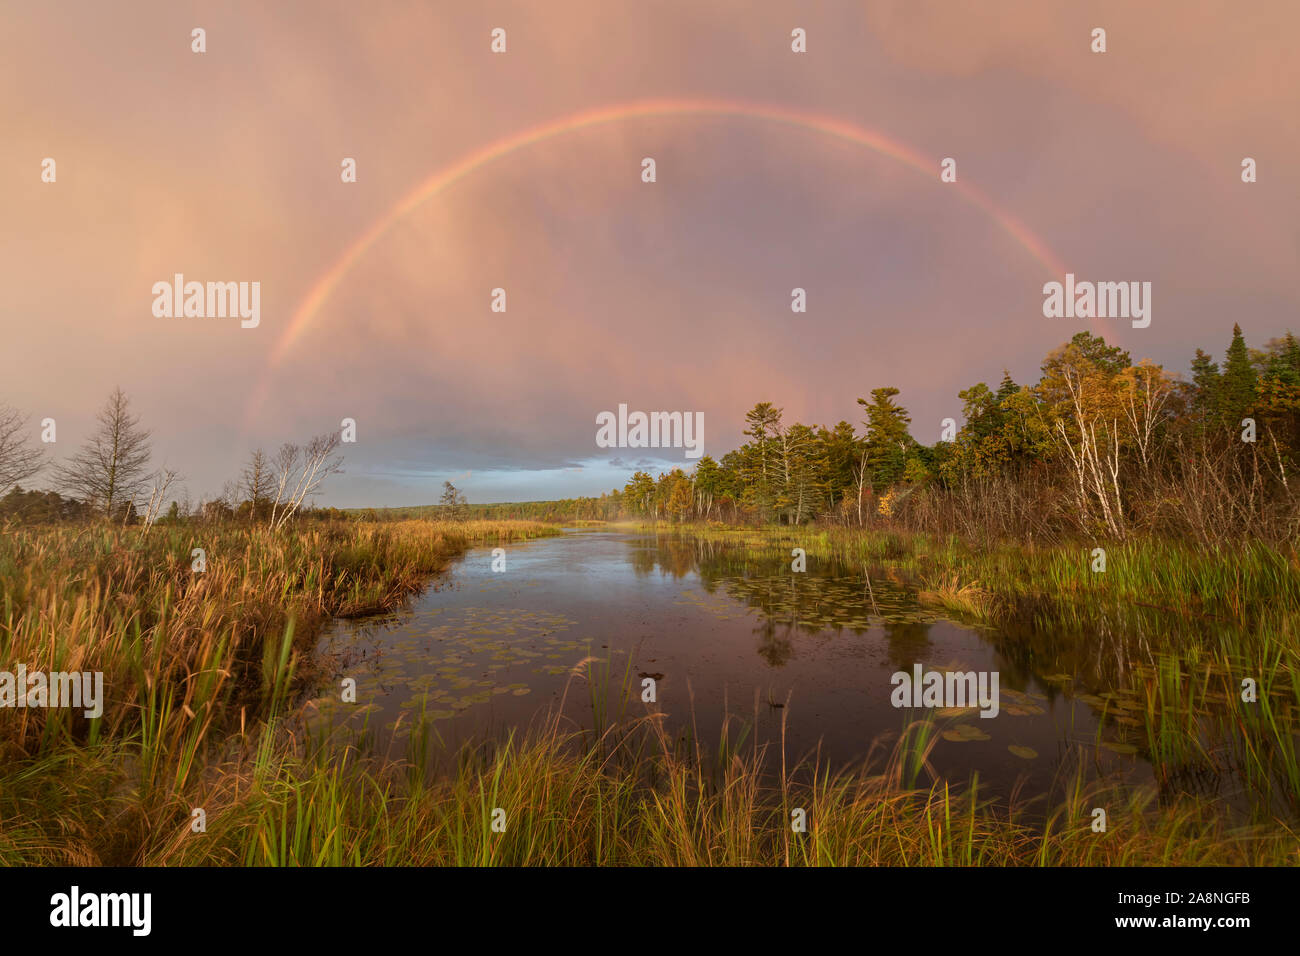 Rainbow su zona umida, Autunno, Wisconsin, USA, da Dominique Braud/Dembinsky Foto Assoc Foto Stock